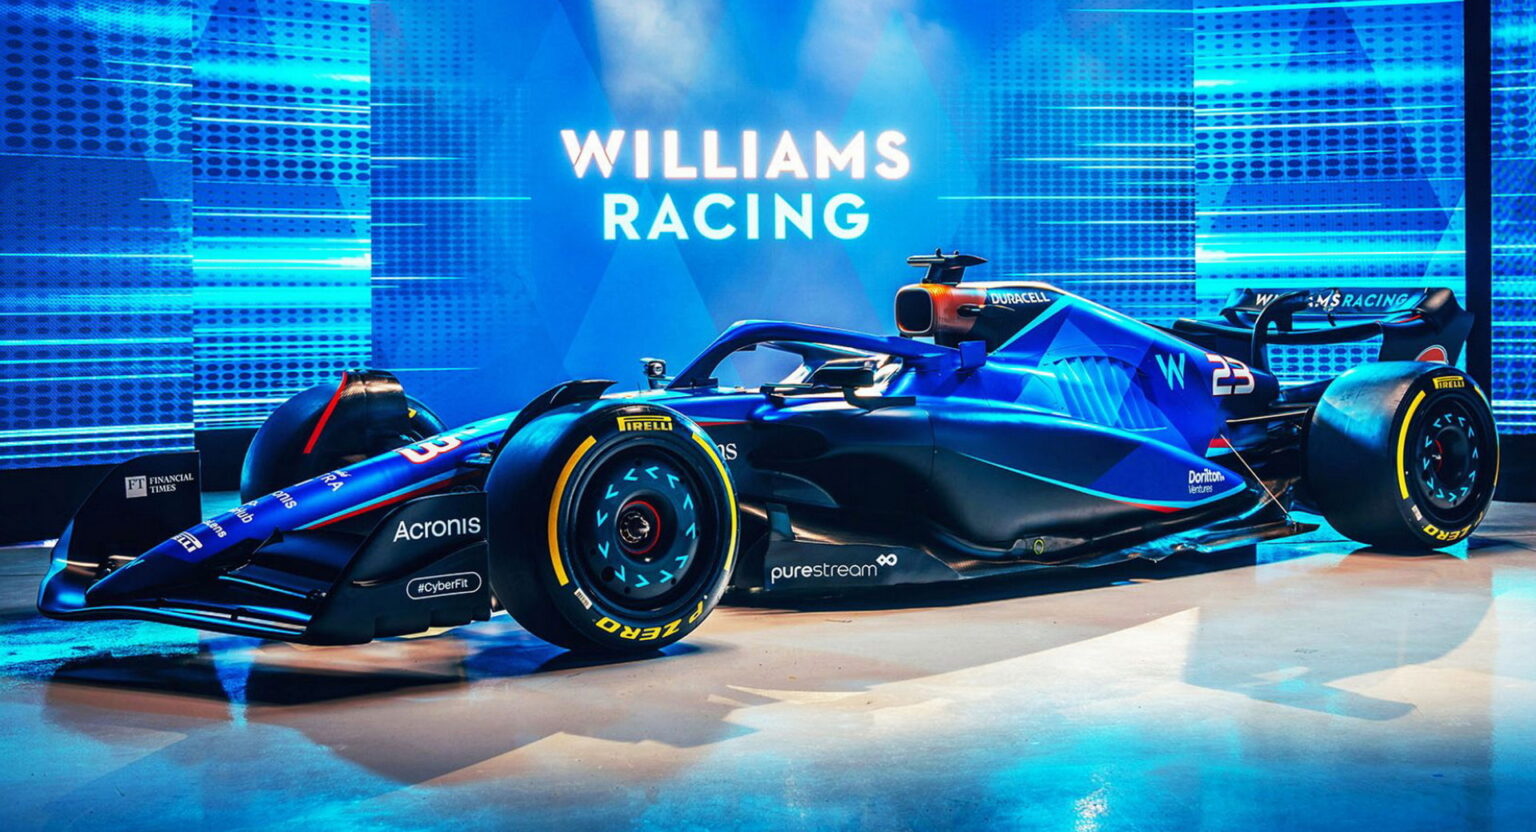 Williams Reveals A Familiar Livery For Their 2023 F1 Car, the FW45